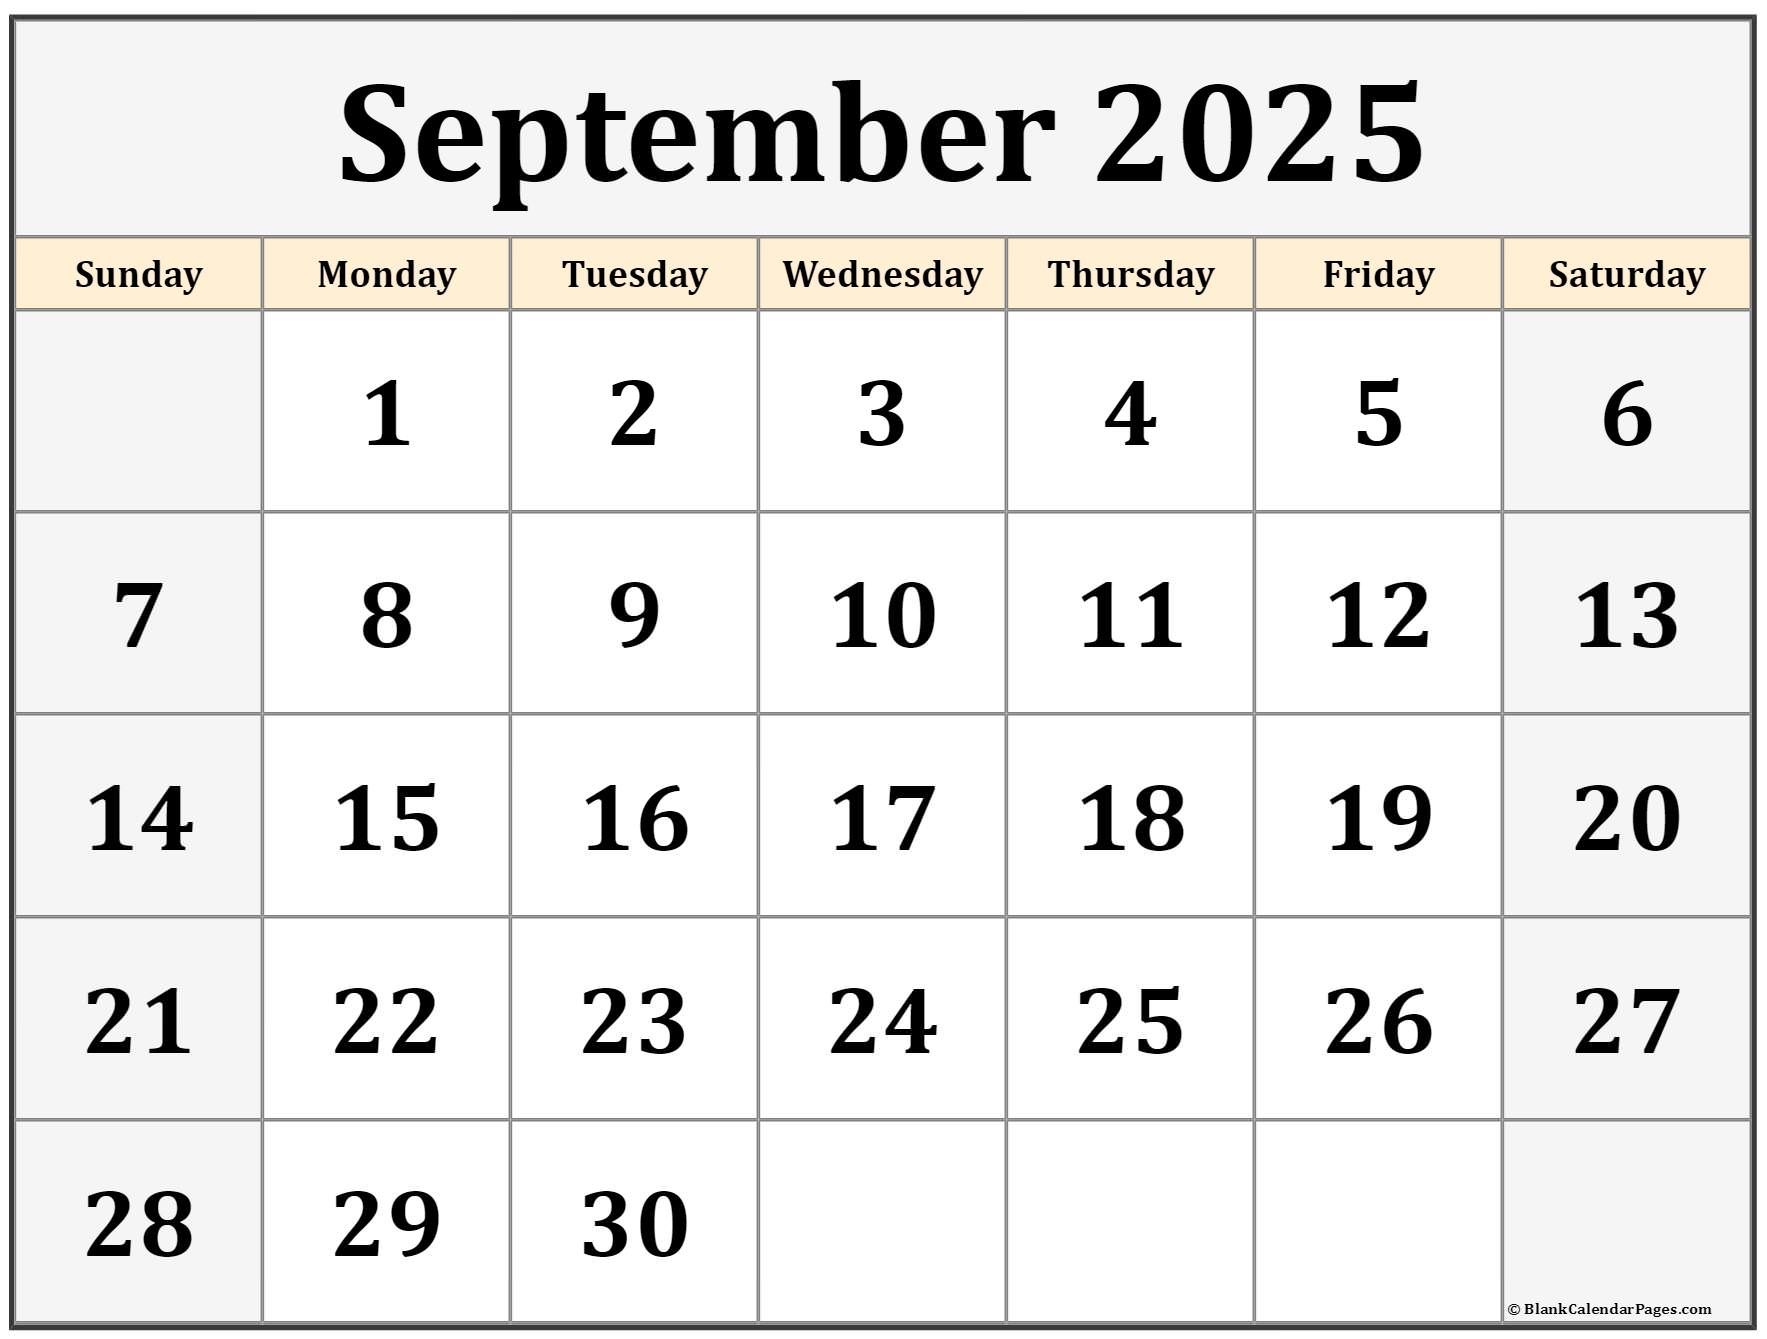 Cute September 2025 Calendars - lia sibilla